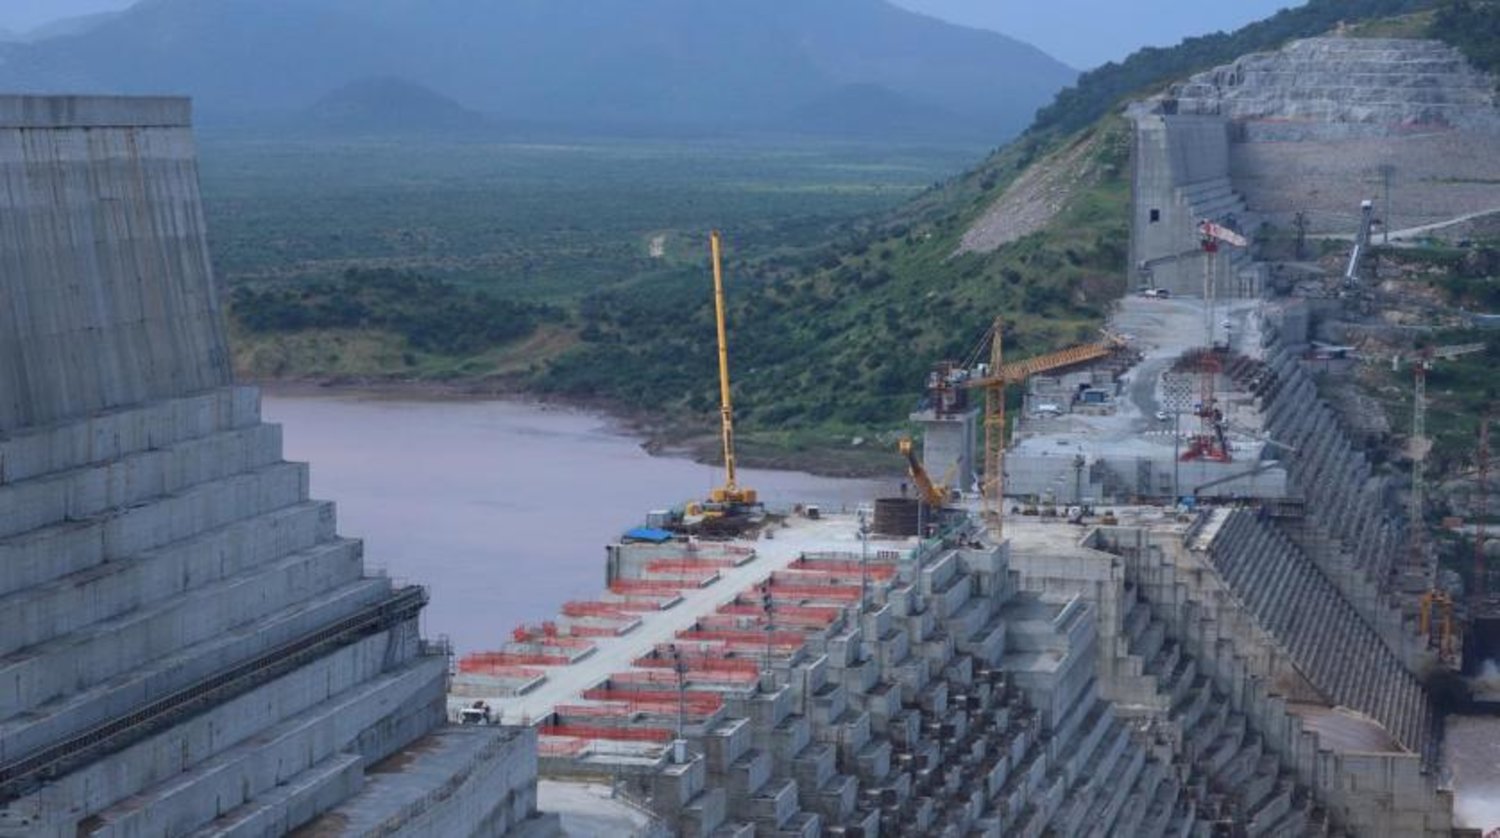  Ethiopia's Grand Renaissance Dam is seen as it undergoes construction work on the river Nile in Guba Woreda, Benishangul Gumuz Region, Ethiopia September 26, 2019. Picture taken September 26, 2019. REUTERS/Tiksa Negeri/File Photo